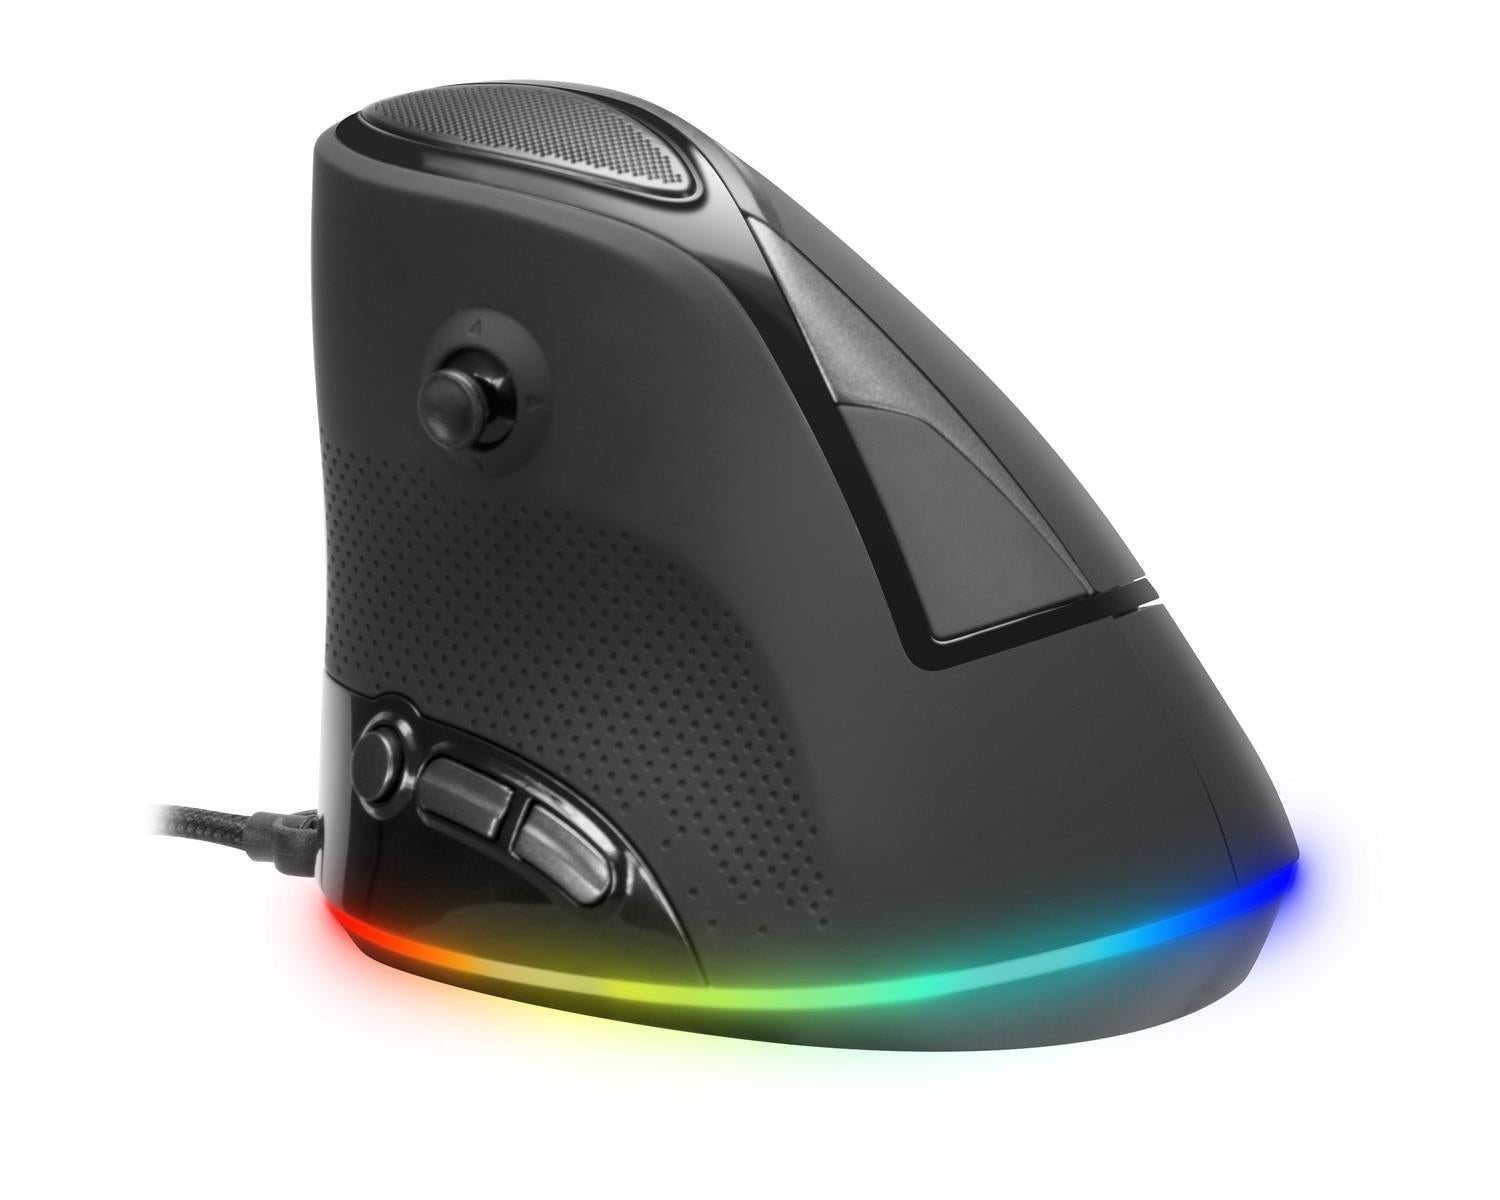 SpeedLink SOVOS Vertical RGB Gaming Mouse, black